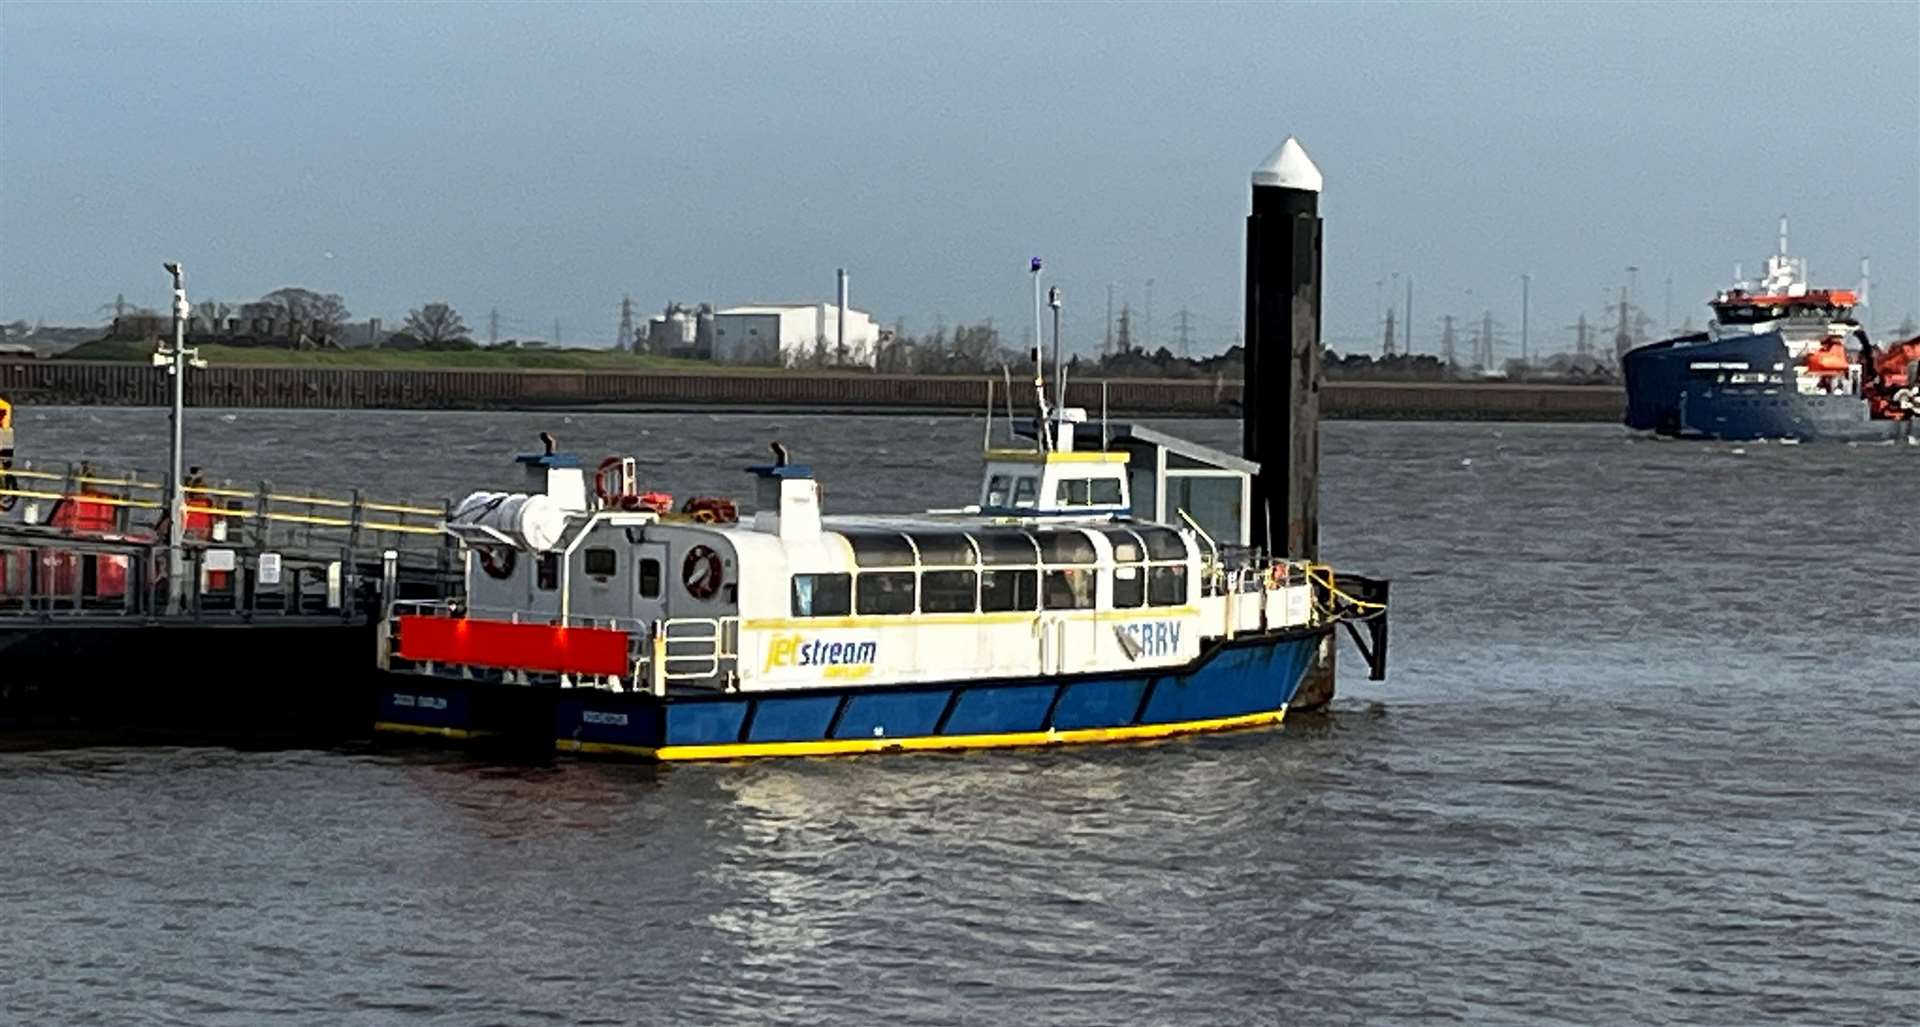 Tilbury Ferry